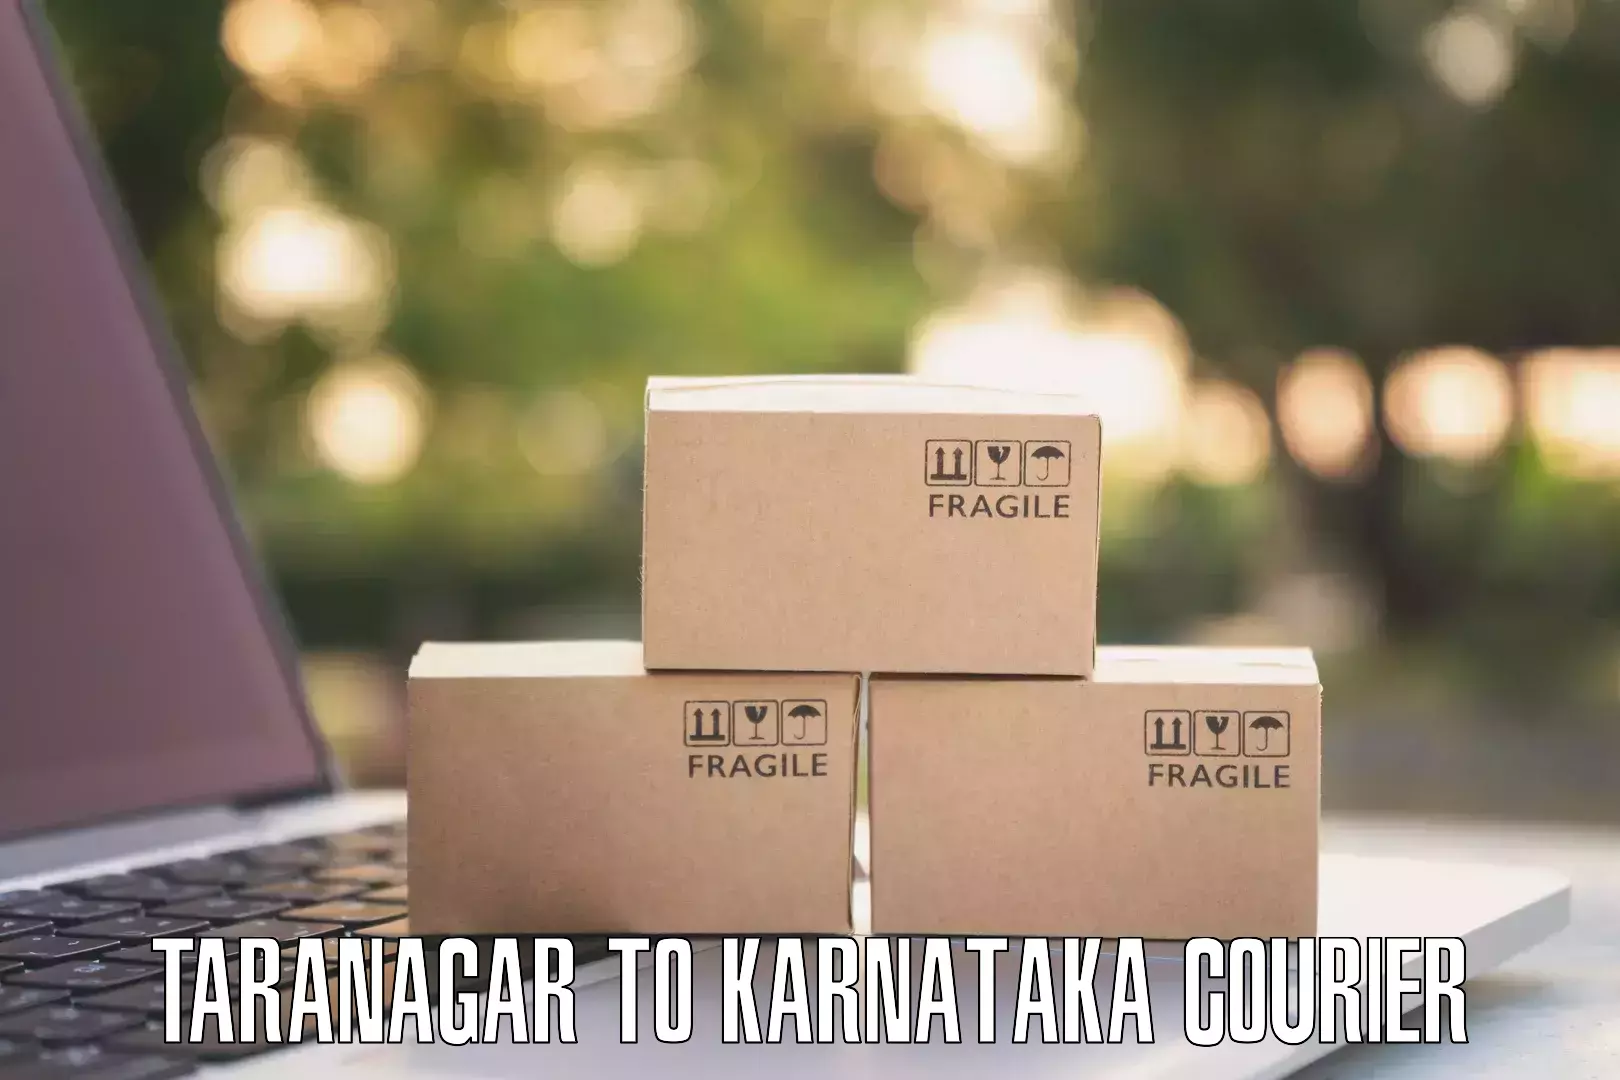 User-friendly courier app Taranagar to Basavakalyan